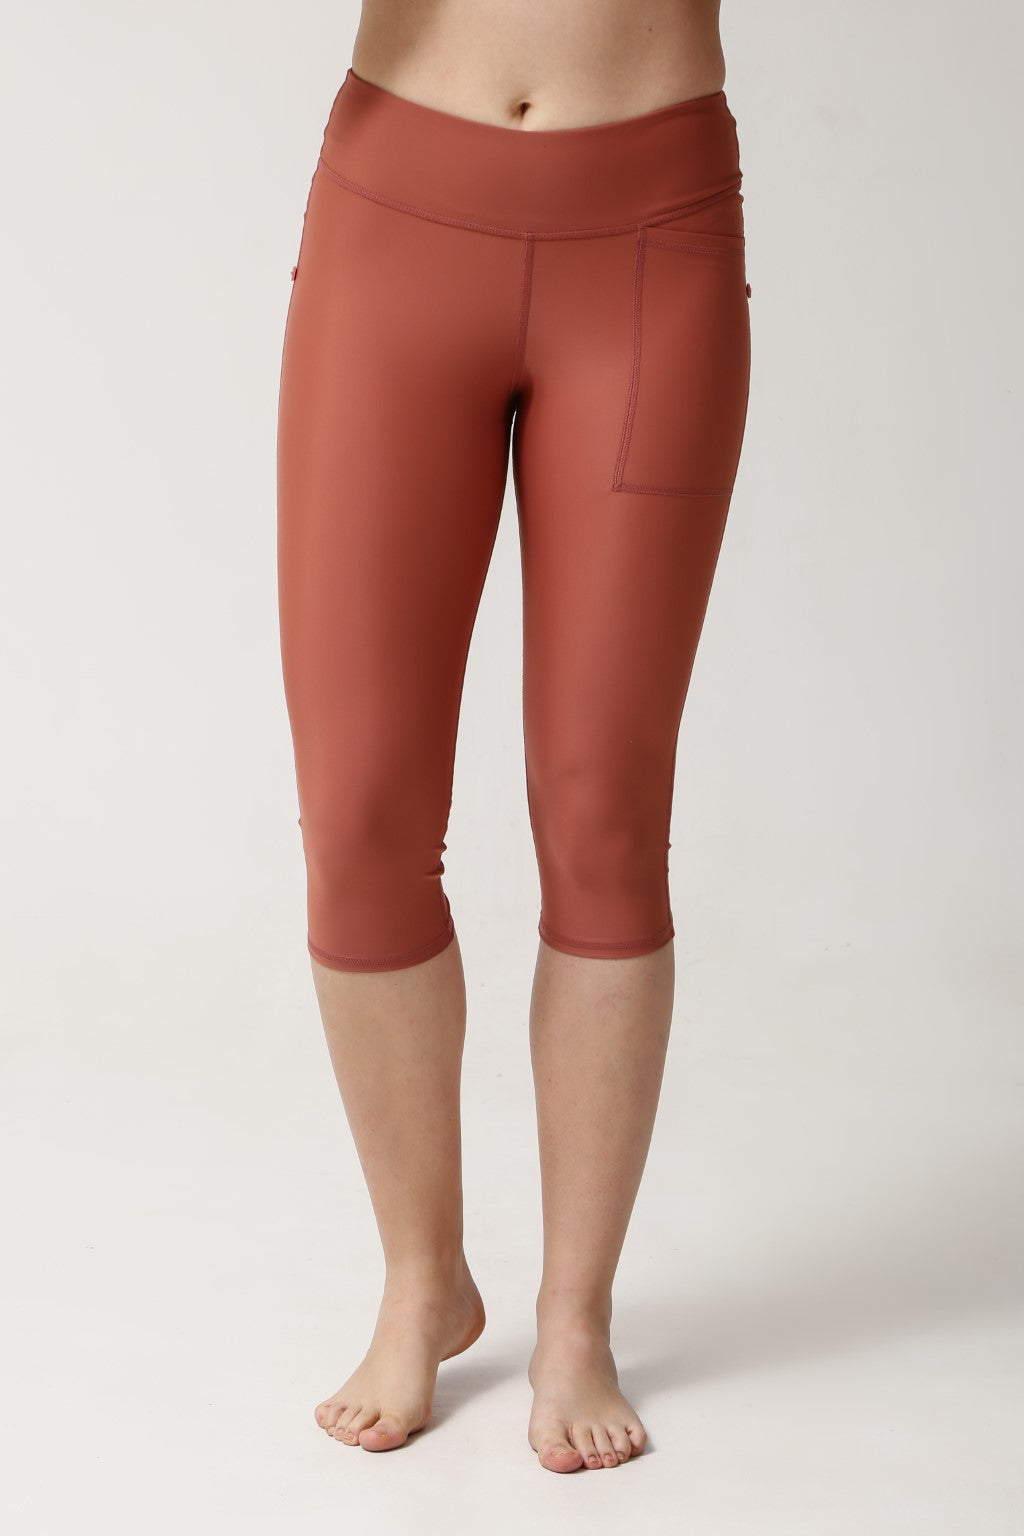 Lanuuk Capri Swim Tights - Clay | Cropped Shorts Swimming Leggings Modest Swimwear Burkini